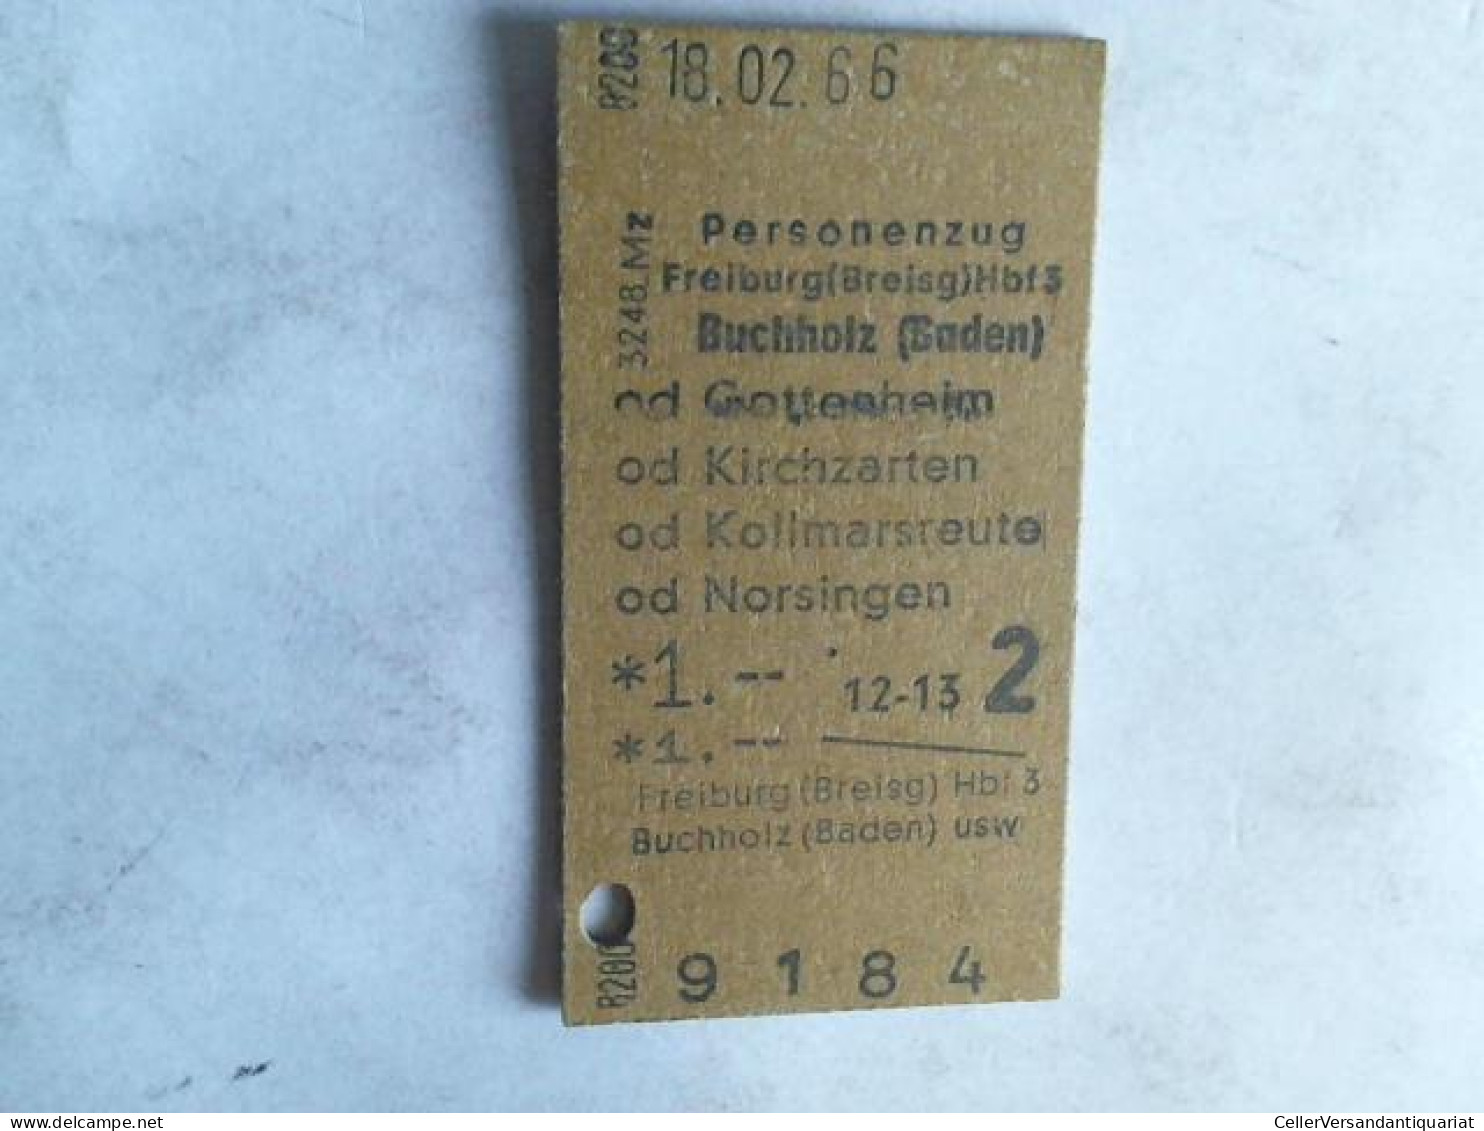 Fahrkarte Personenzug Freiburg (Breisg) Hbf 3 - Buchholz (Baden) Od Gottesheim Od Kirchzarten Od Kollmarsreute Od... - Unclassified